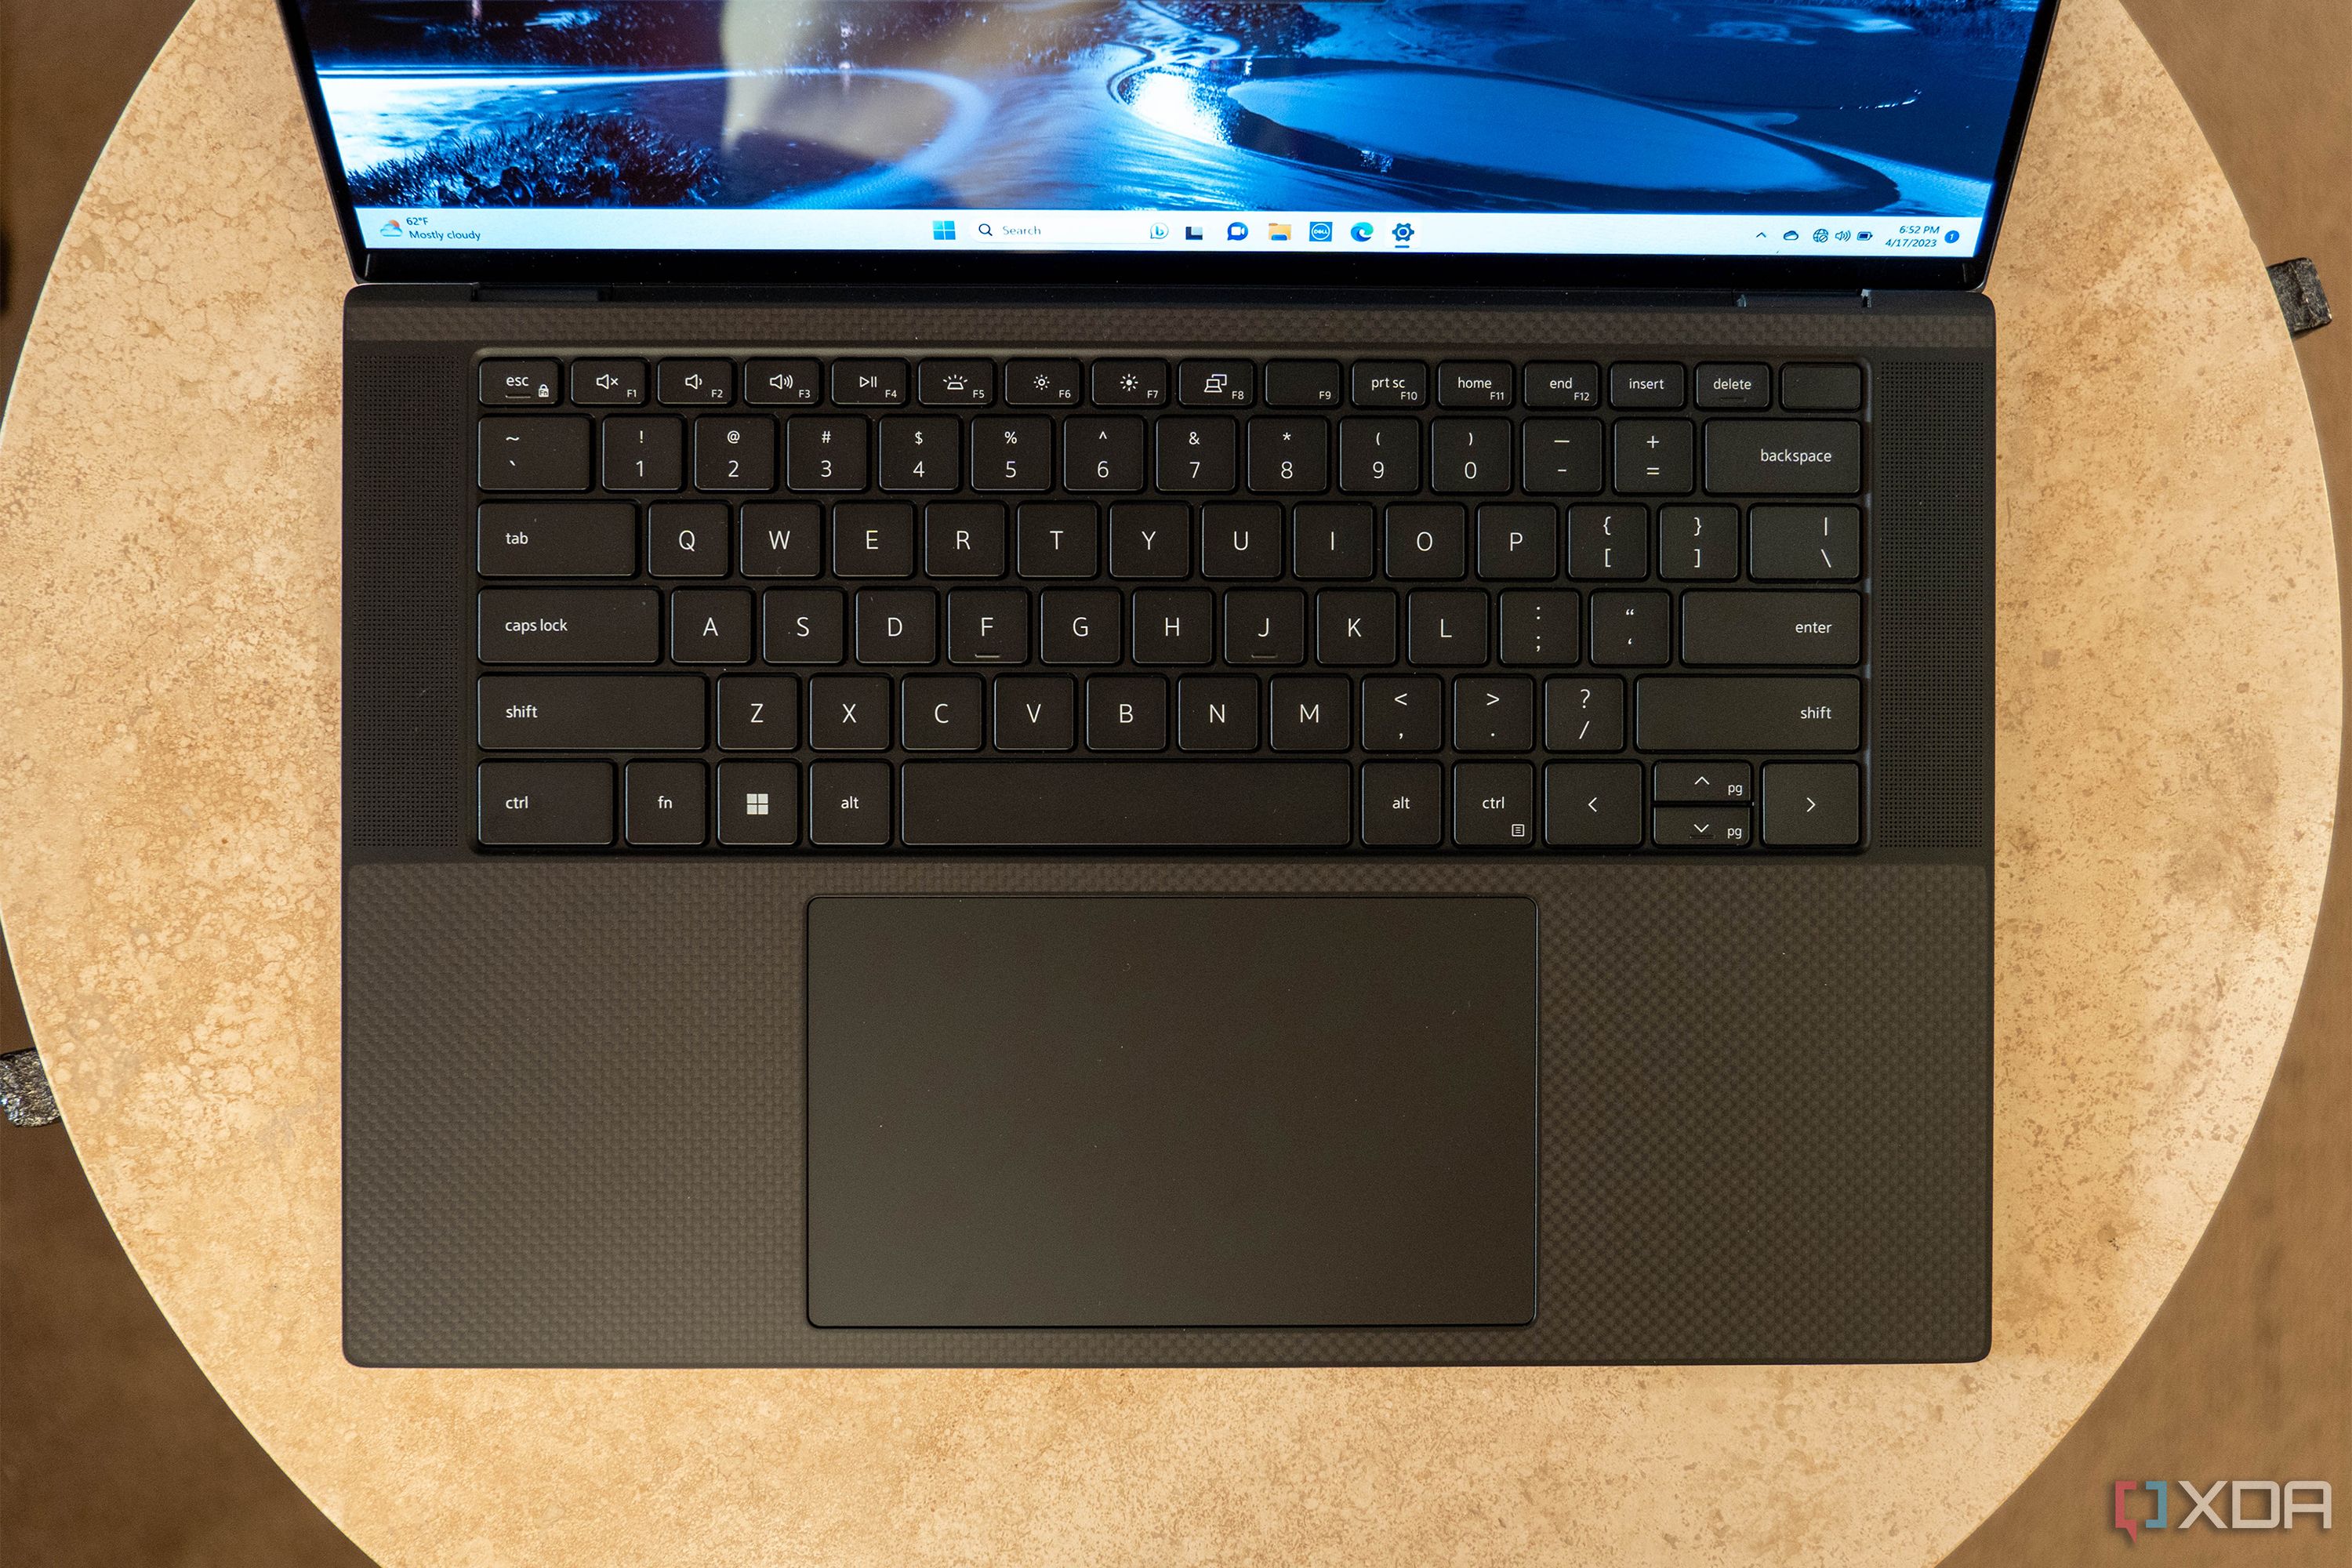 Top down view of black laptop keyboard